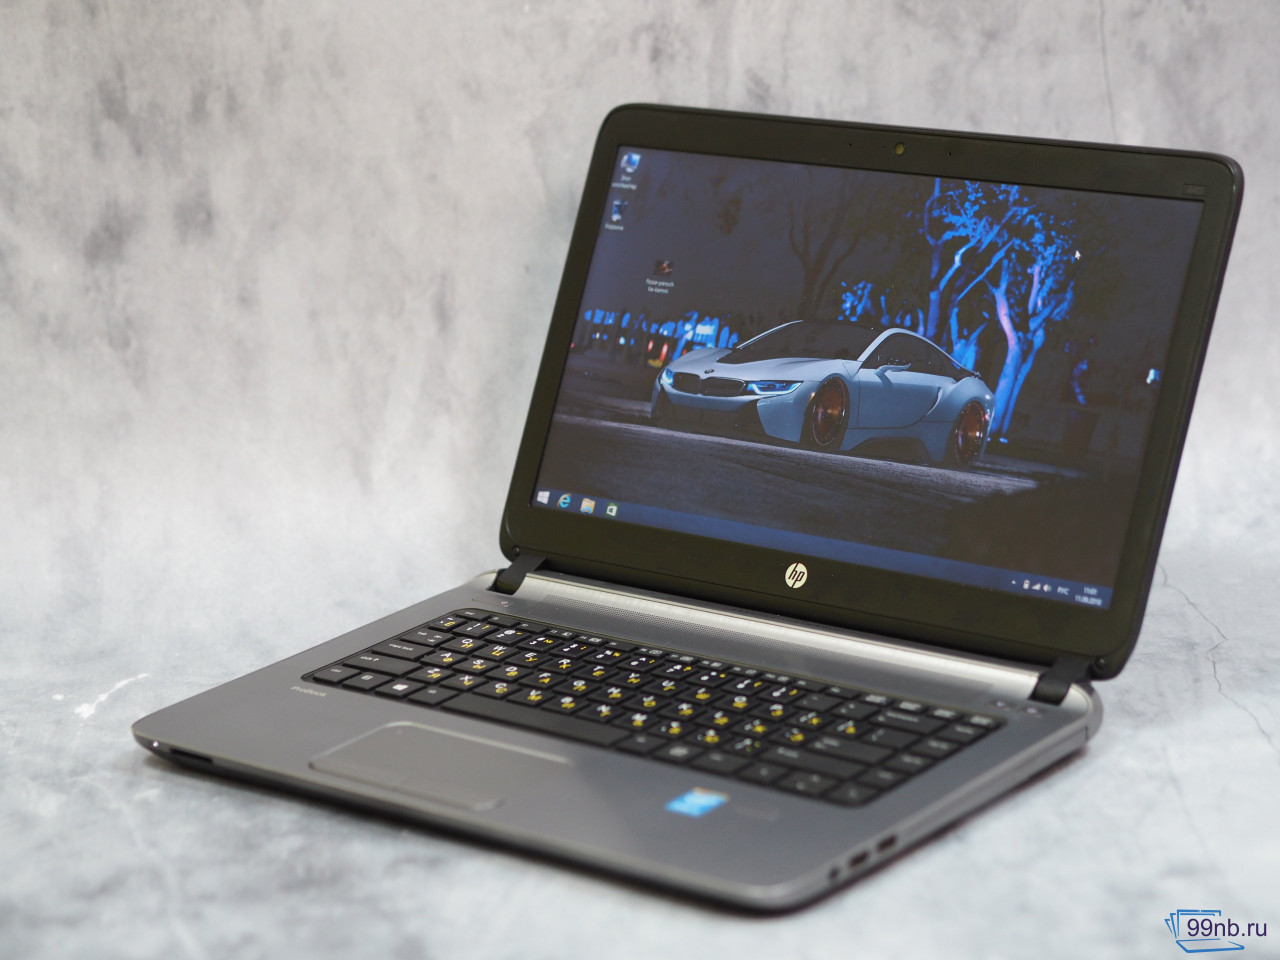  Мощный HP ProBook на i5